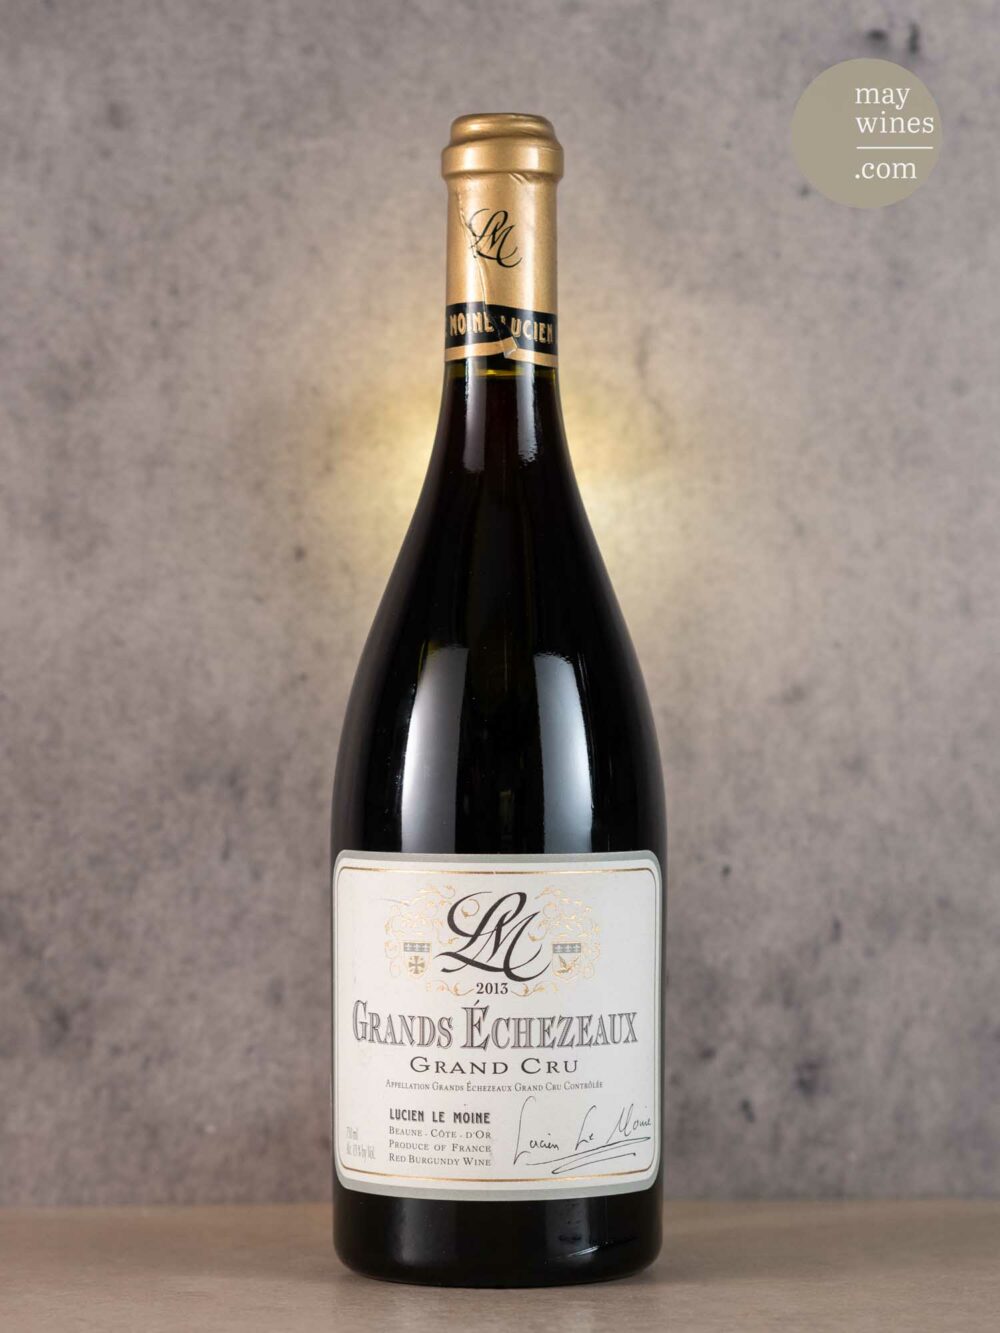 May Wines – Rotwein – 2013 Grands Echézeaux Grand Cru - Lucien Le Moine